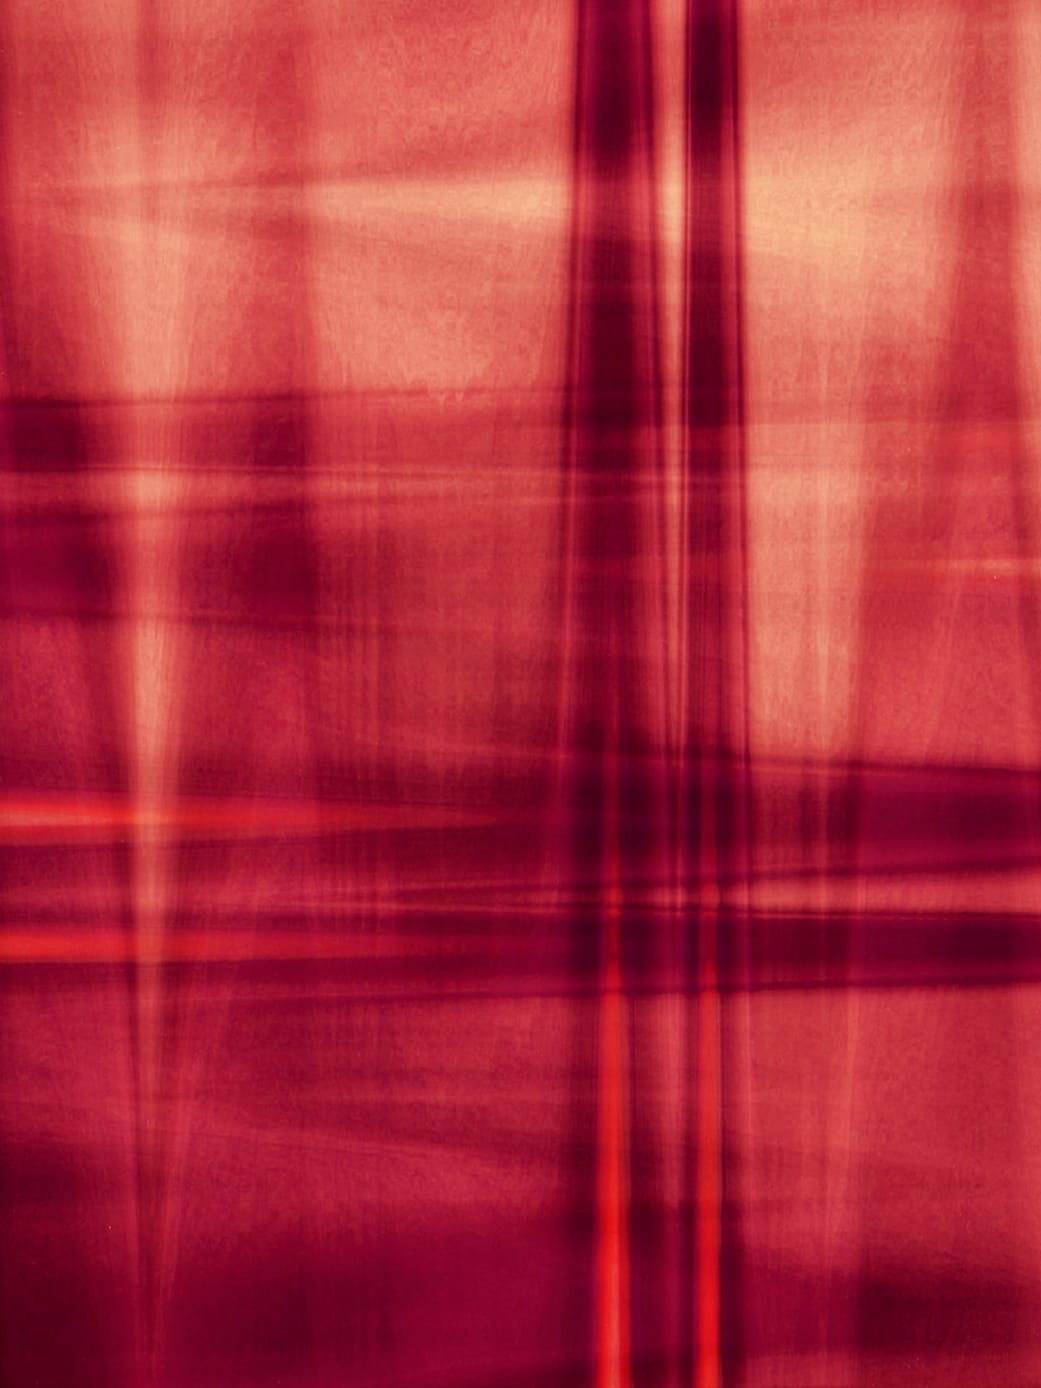 Fotografía, Scanography by Michael Monney aka acylmx, Imagen abstracta en rojo